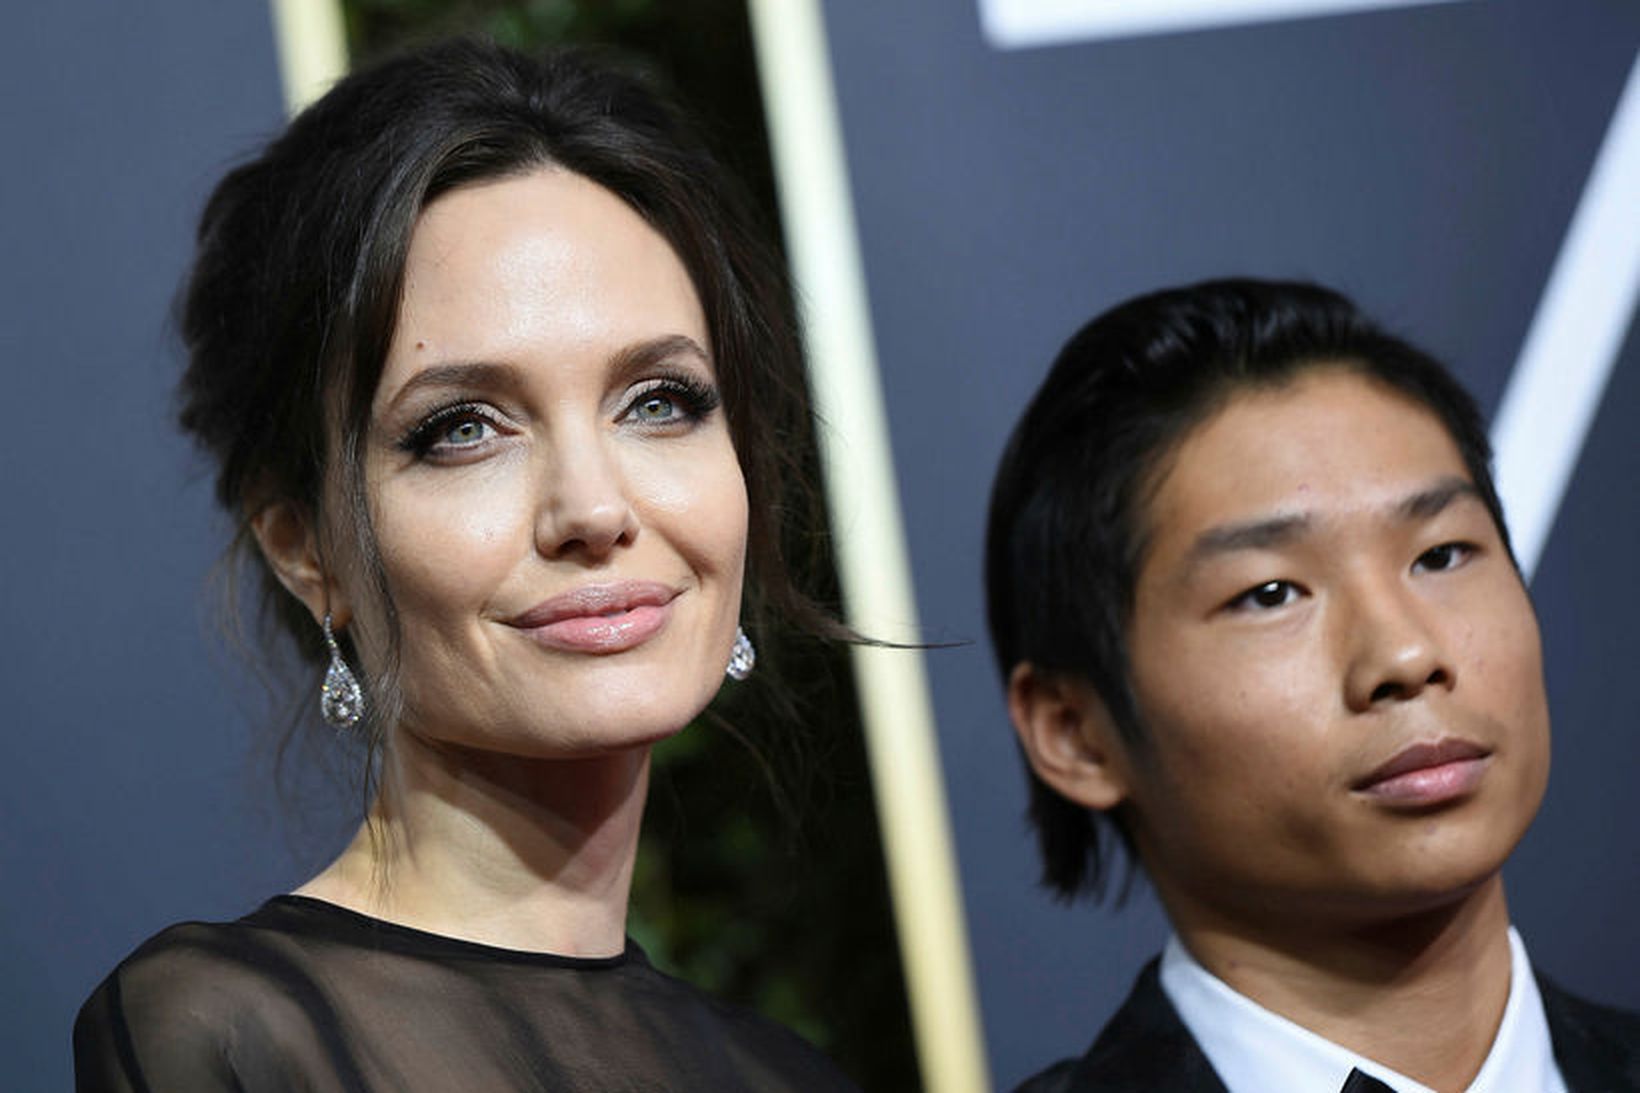 Angelina Jolie ásamt syni sínum Pax.